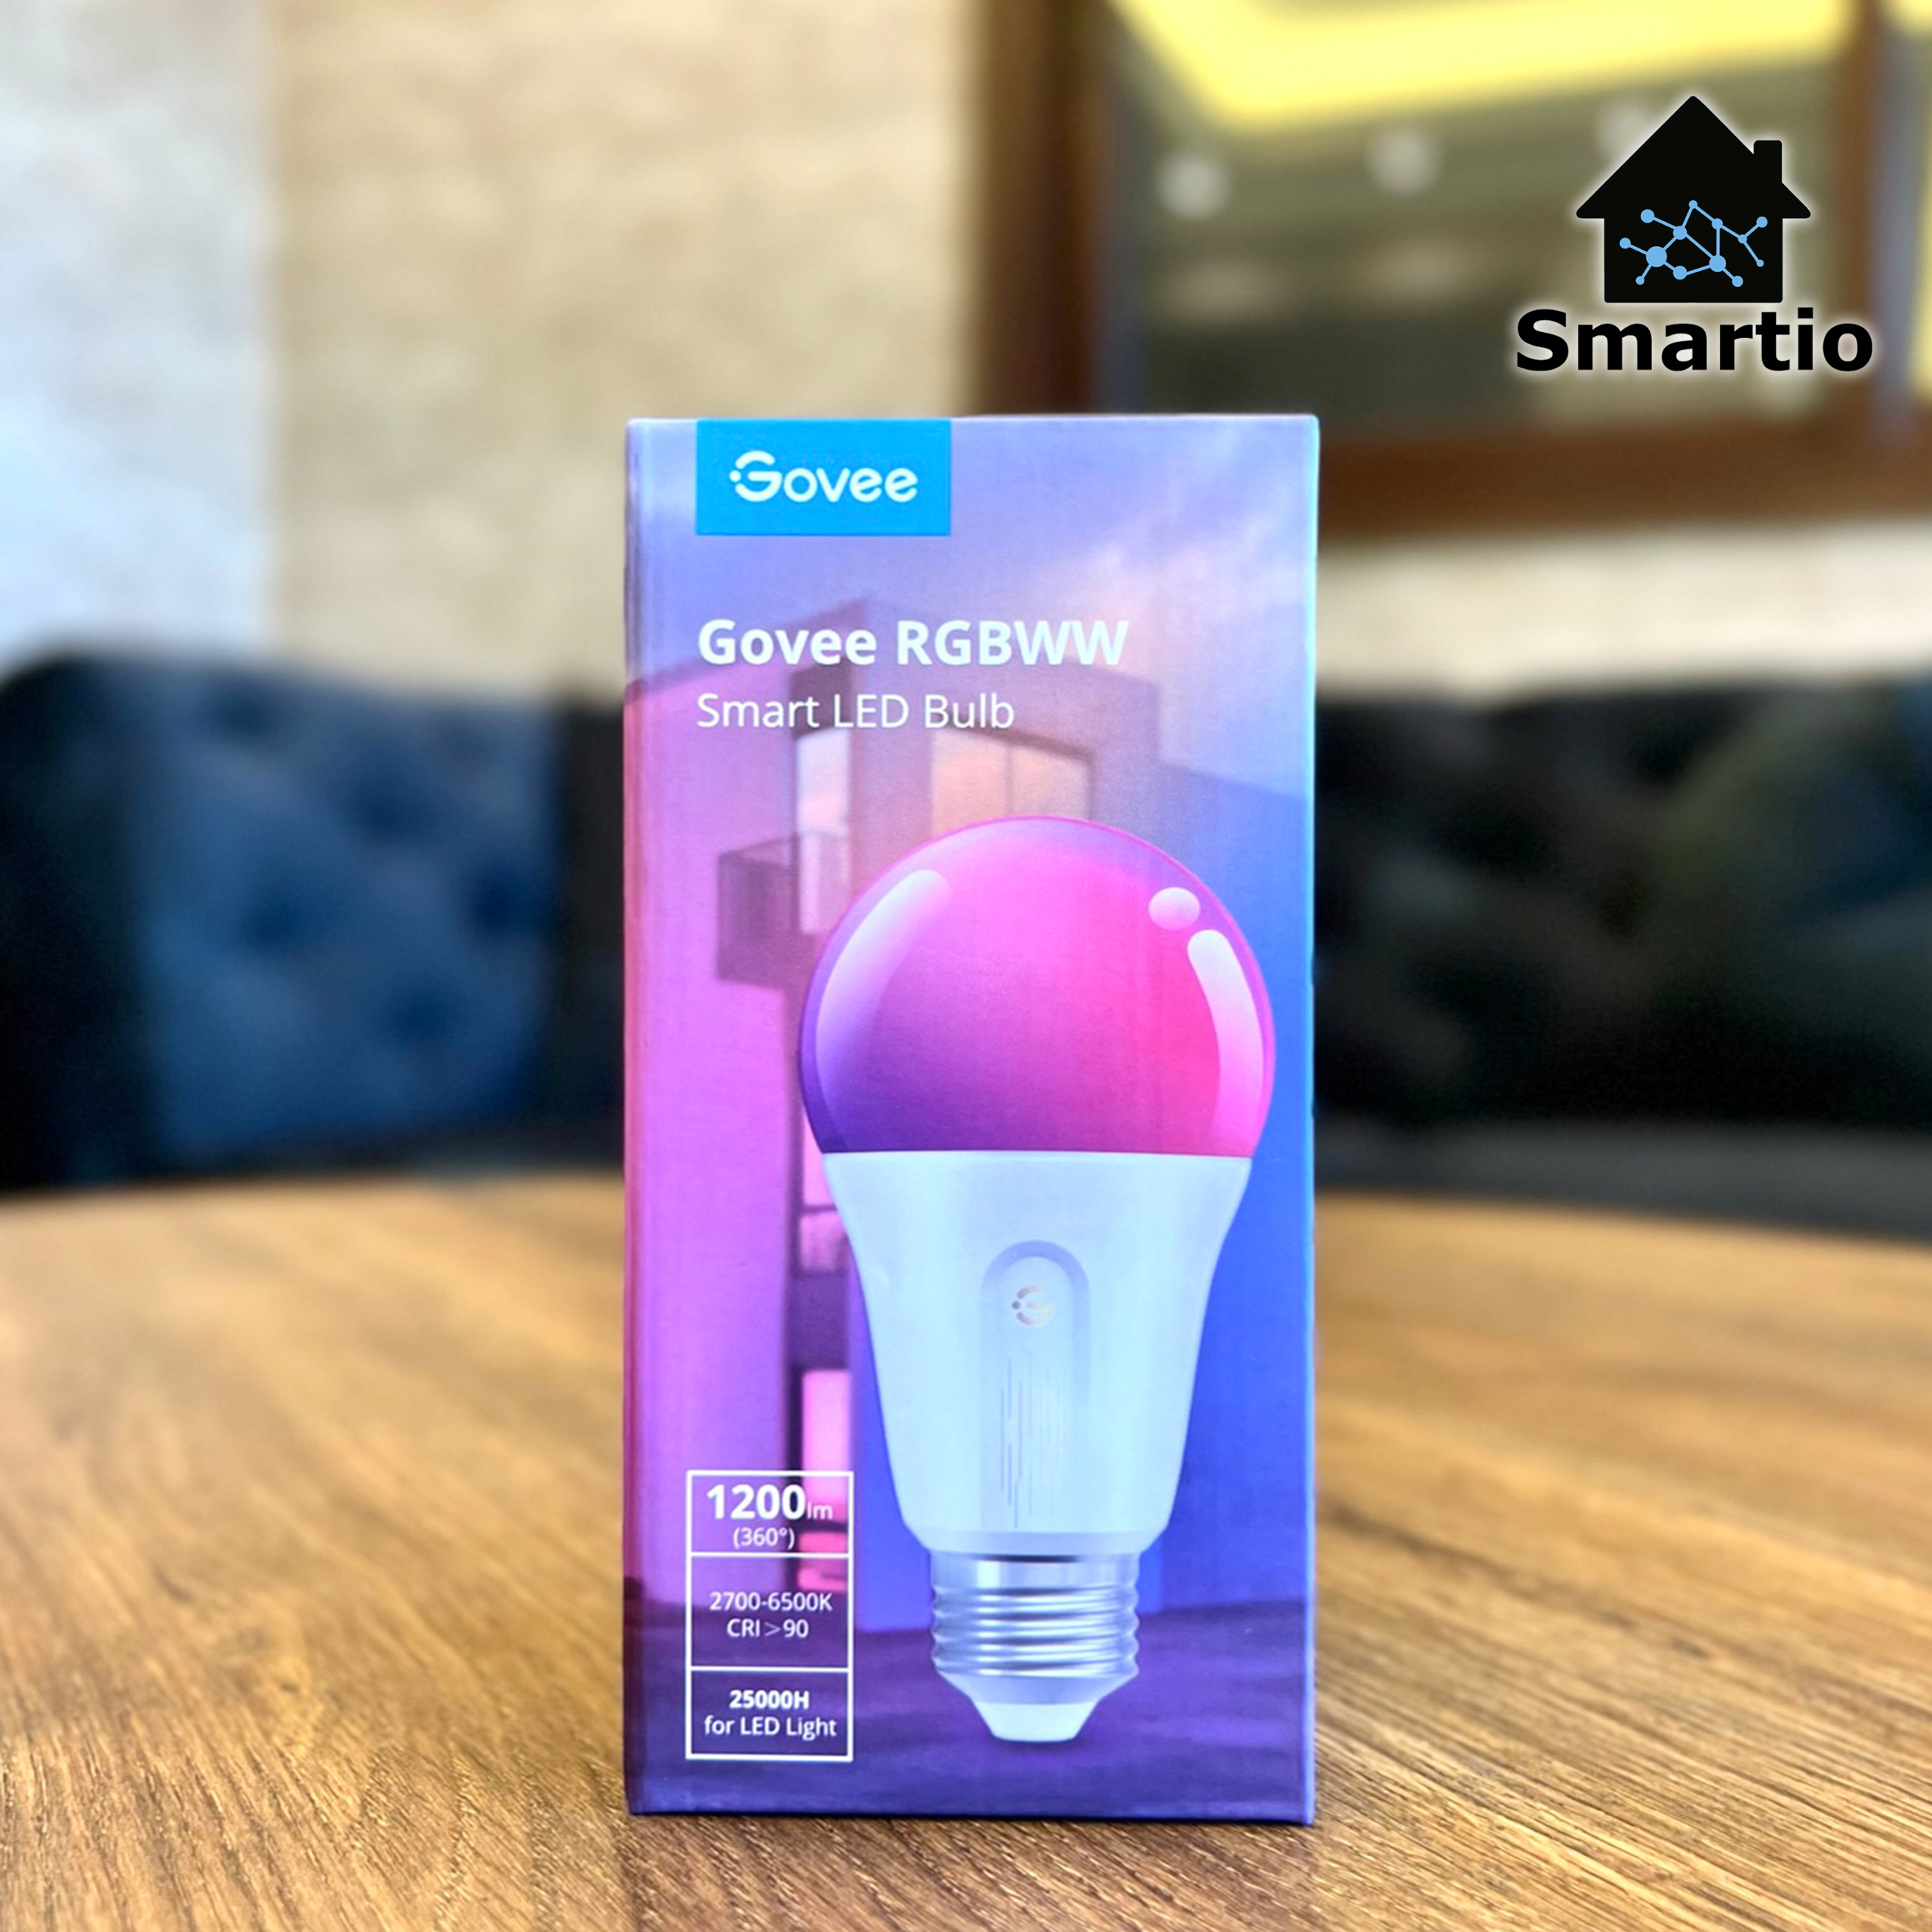 Govee Smart Light Bulbs, WiFi & Bluetooth Color Changing Light